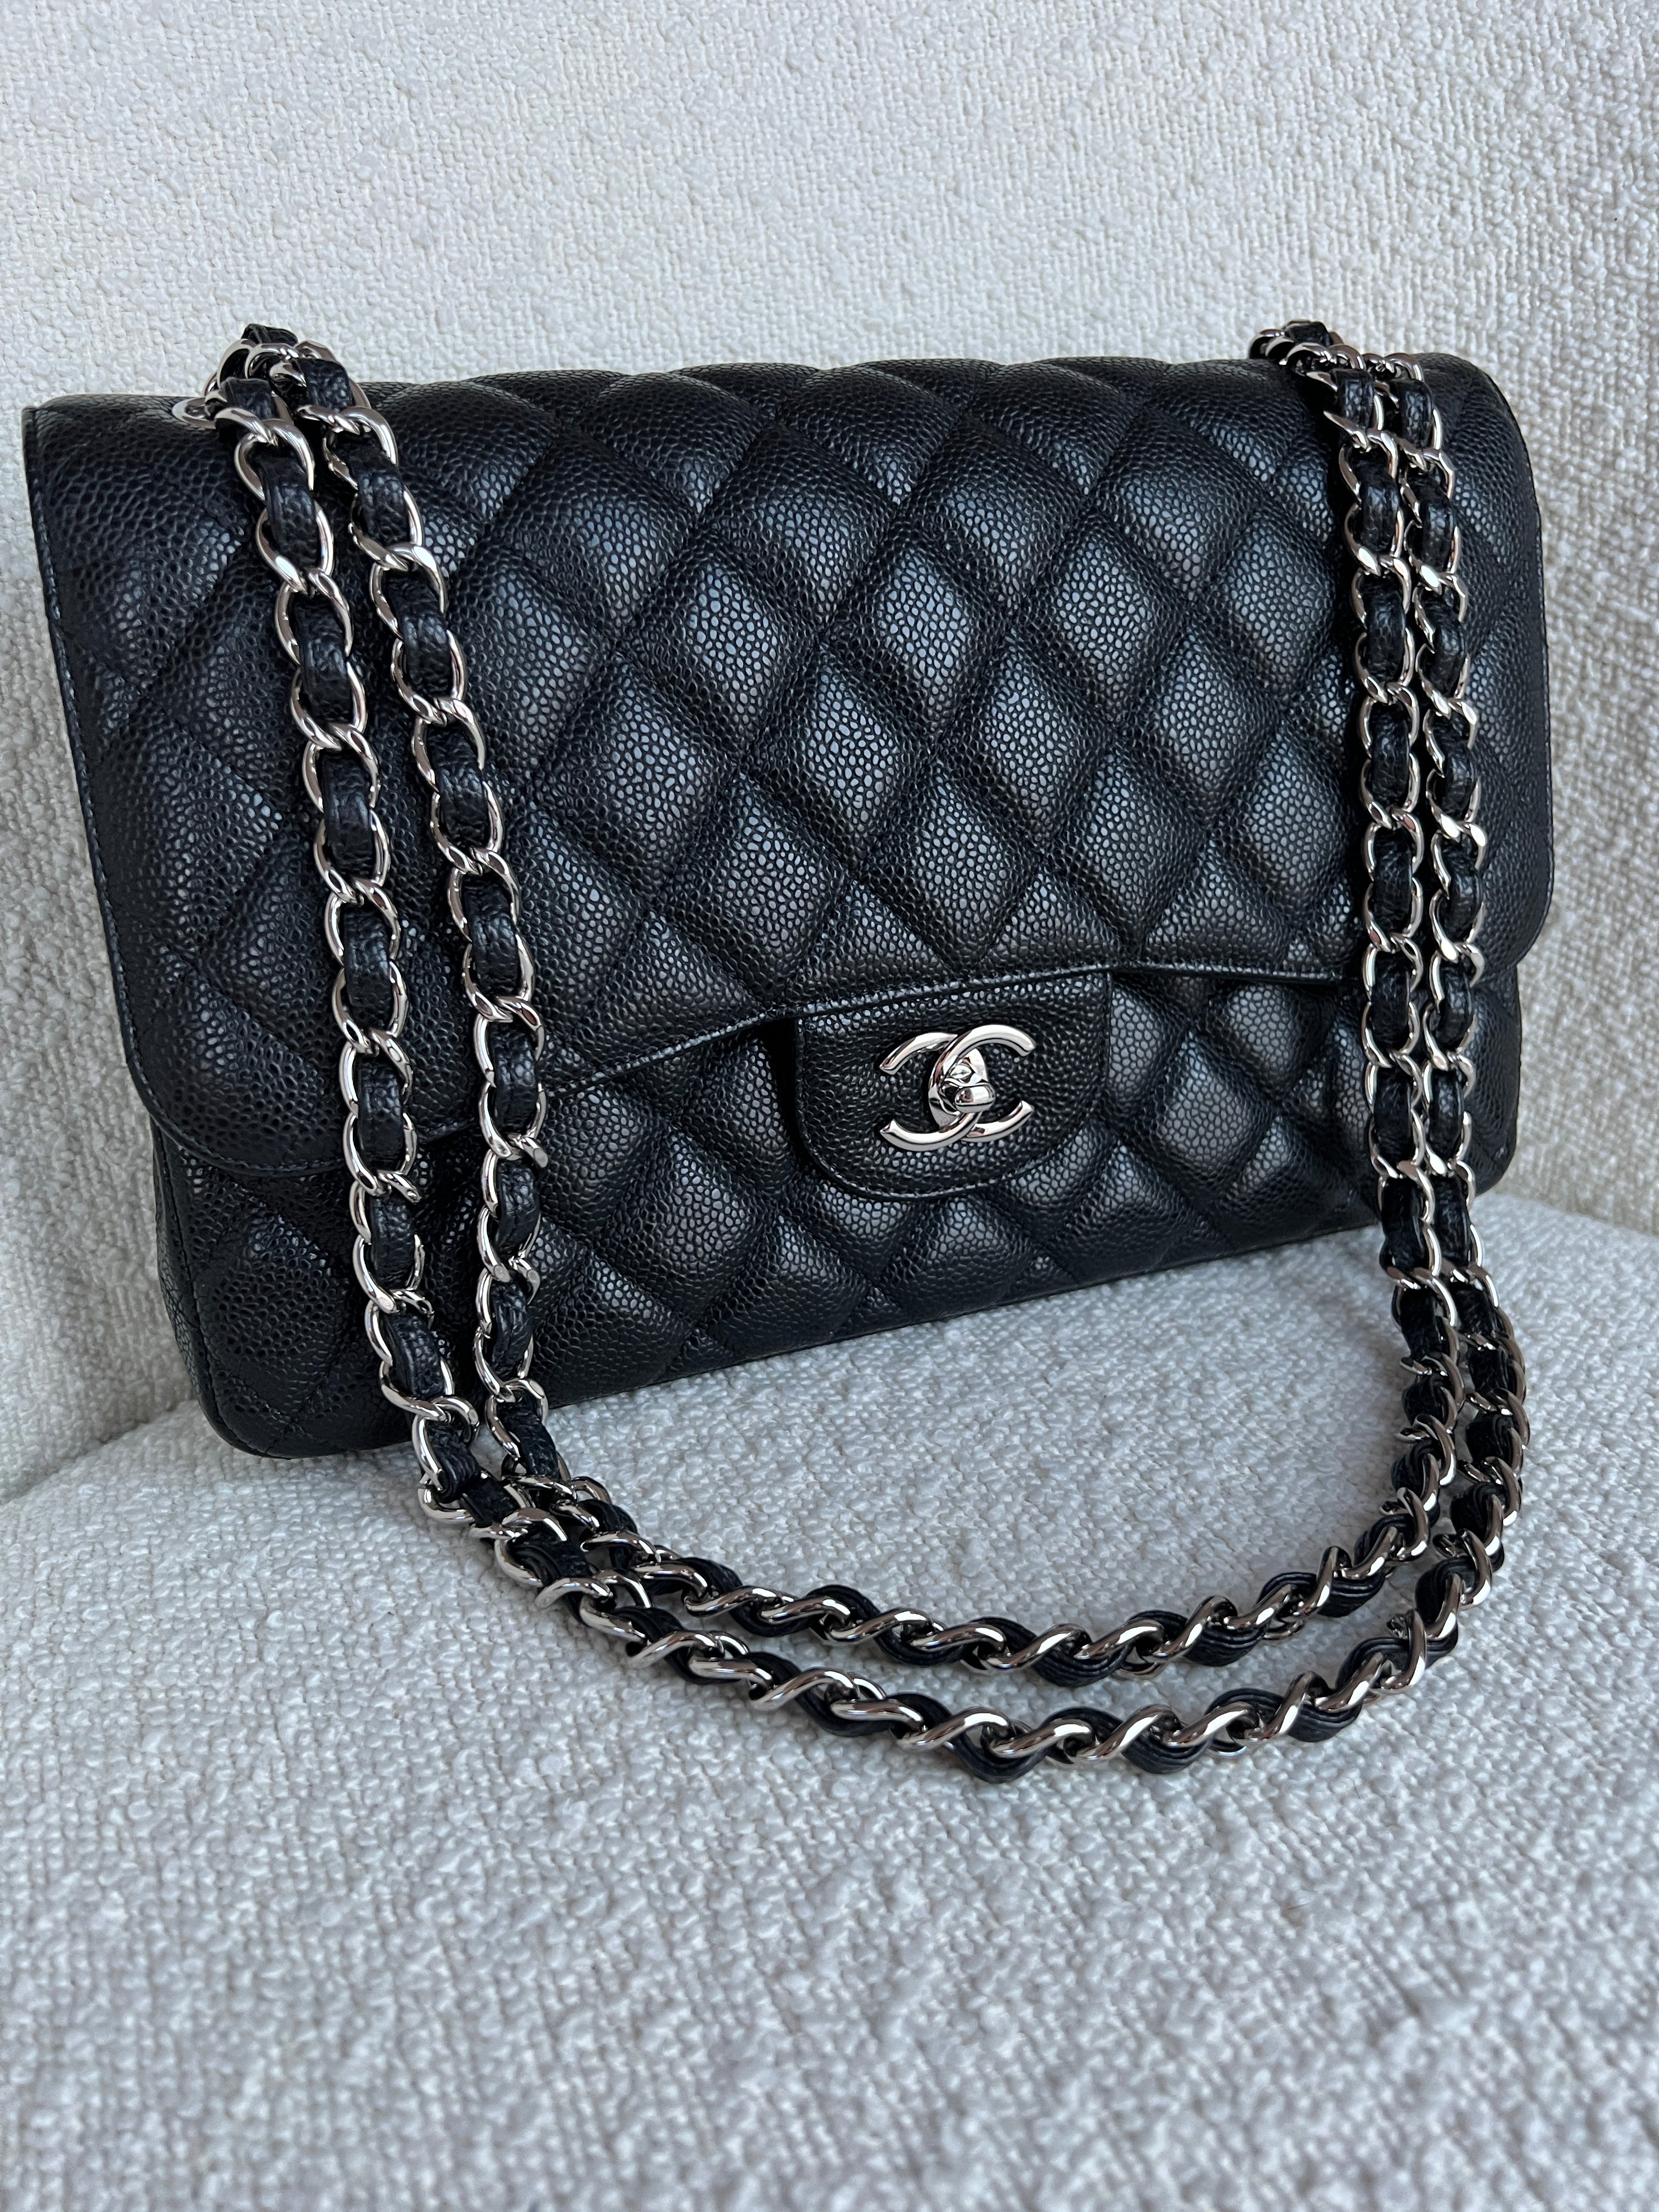 CHANEL Caviar Jumbo Double Flap Bag(RRP £9,240) – LUV Preloved